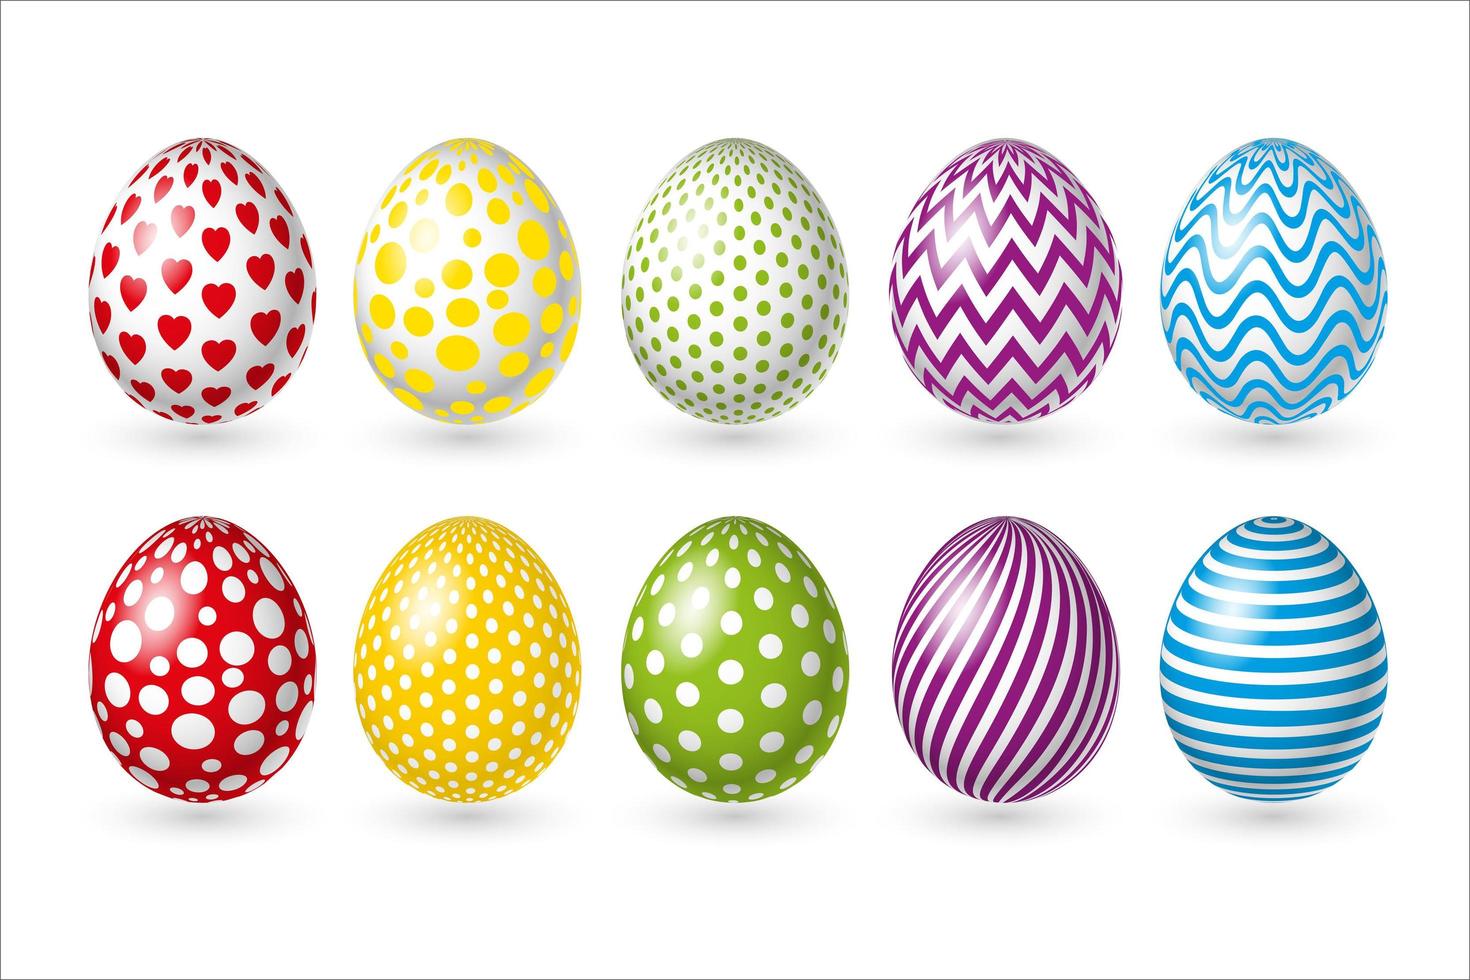 Set Easter color eggs on white background. Vector illustration. Happy Easter eggs ornament.